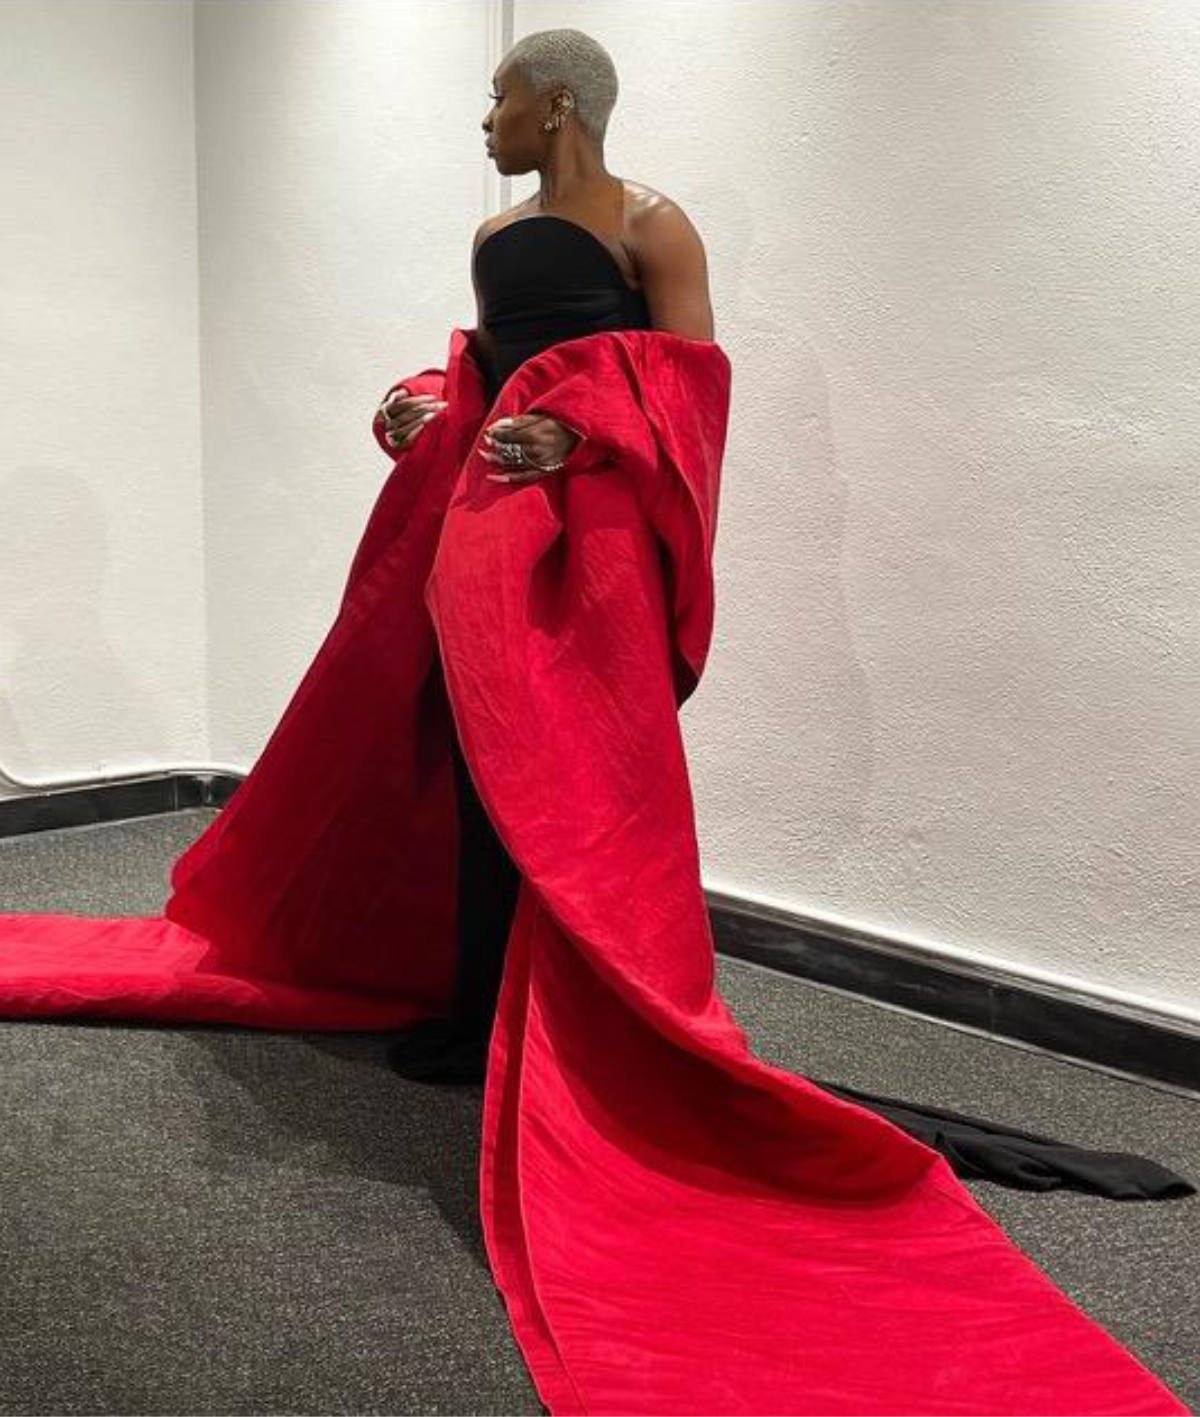 Cynthia Erivo Wore Schiaparelli Haute Couture To The Premiere Of “Genius: Aretha”